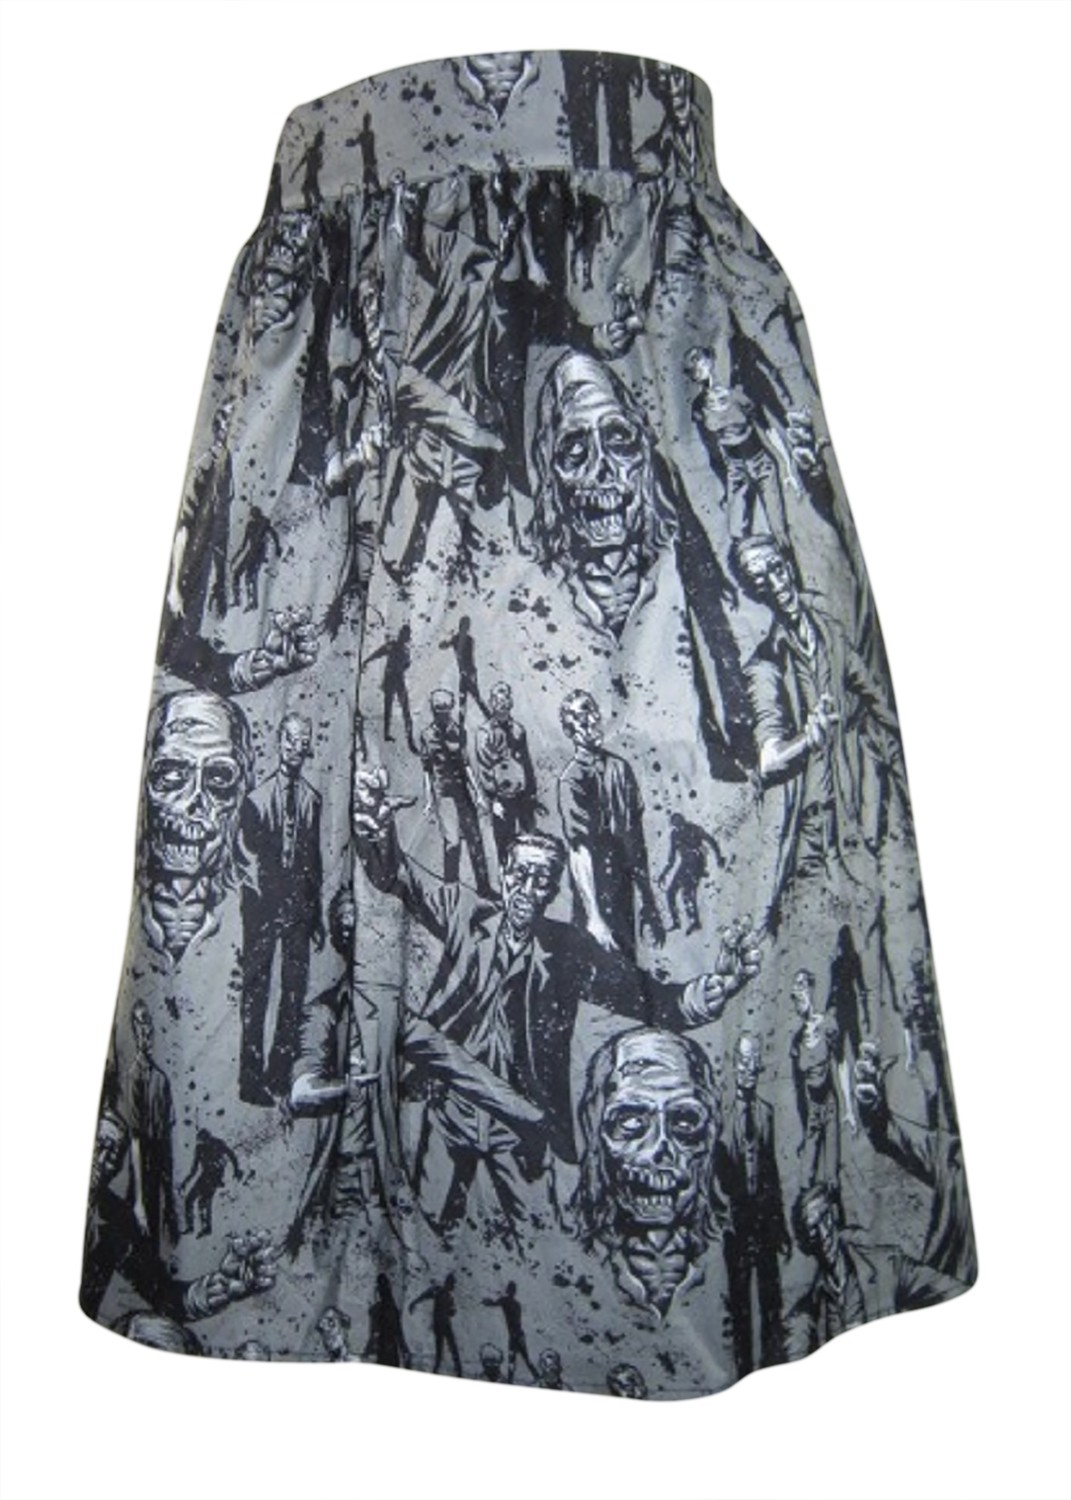 Plus Size Folter Zombie Halloween Skirt